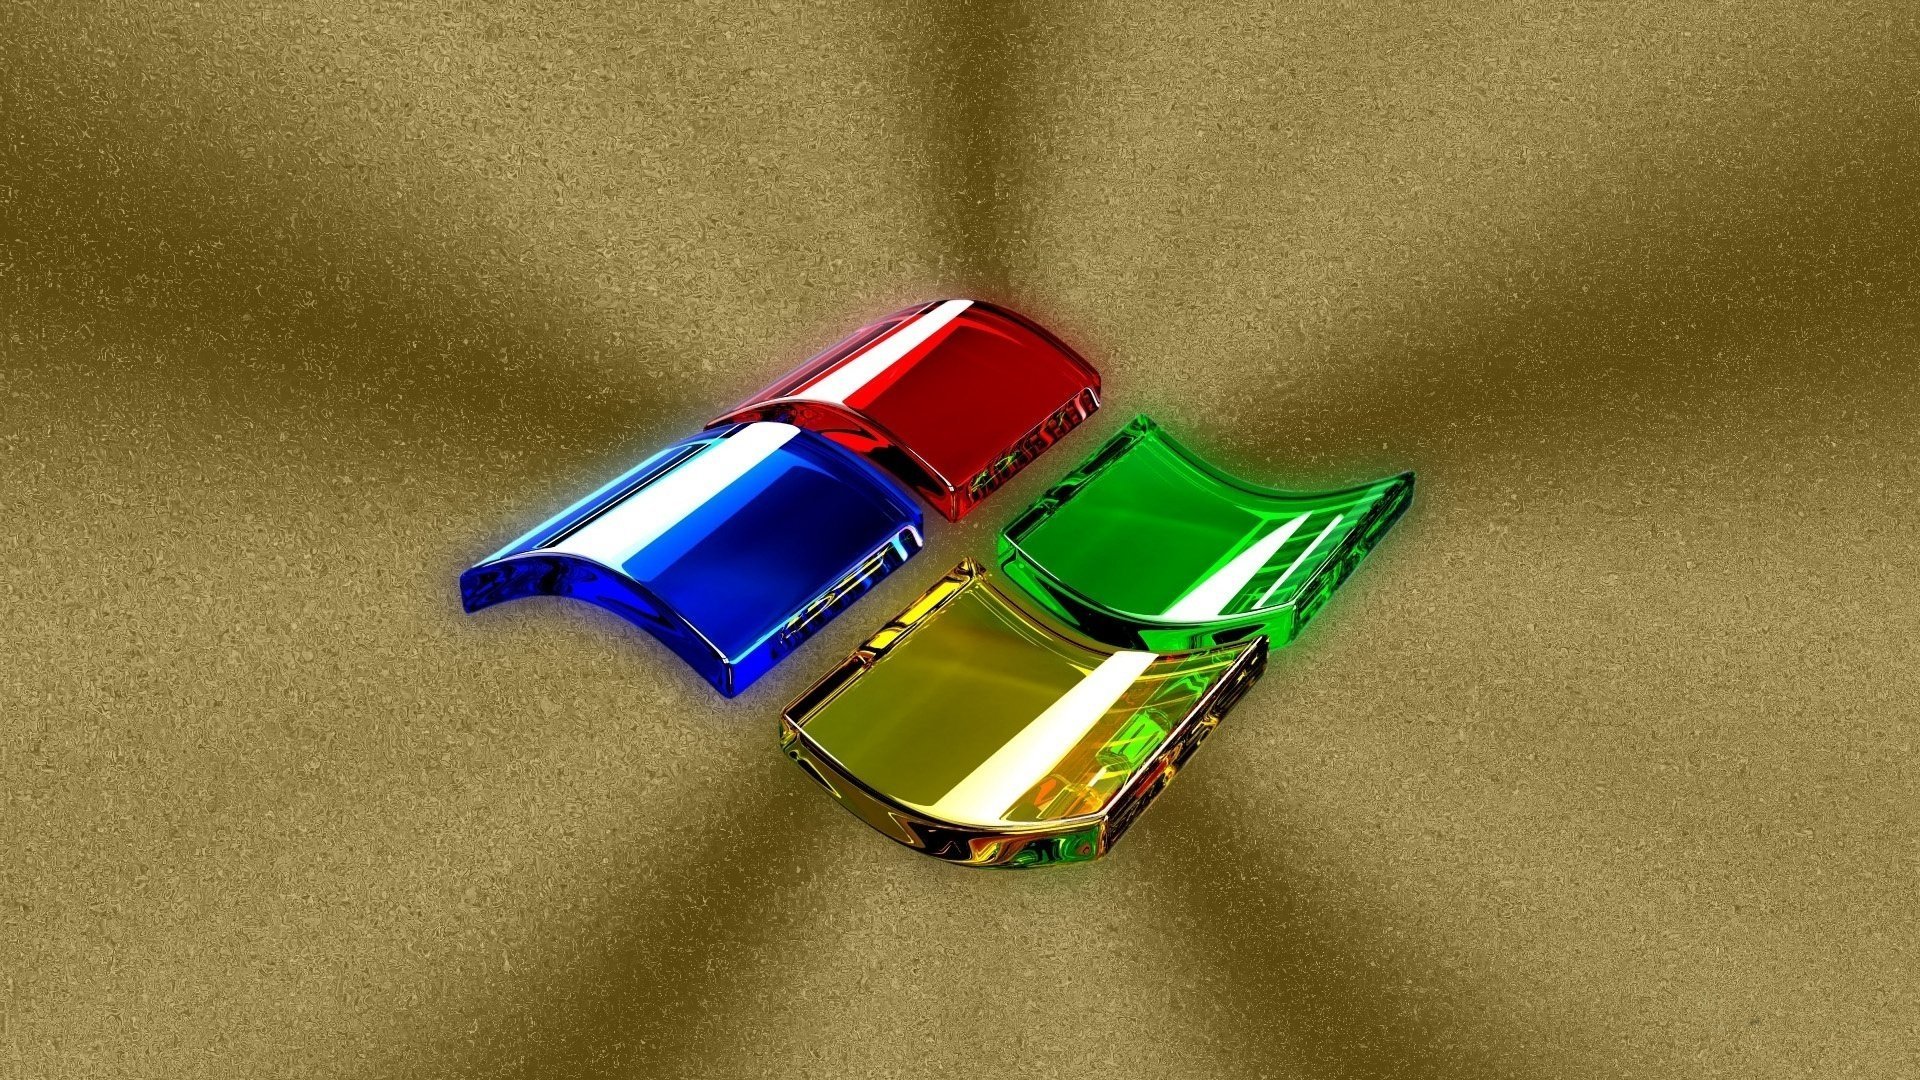 Maykrasoft windows multicolored logo